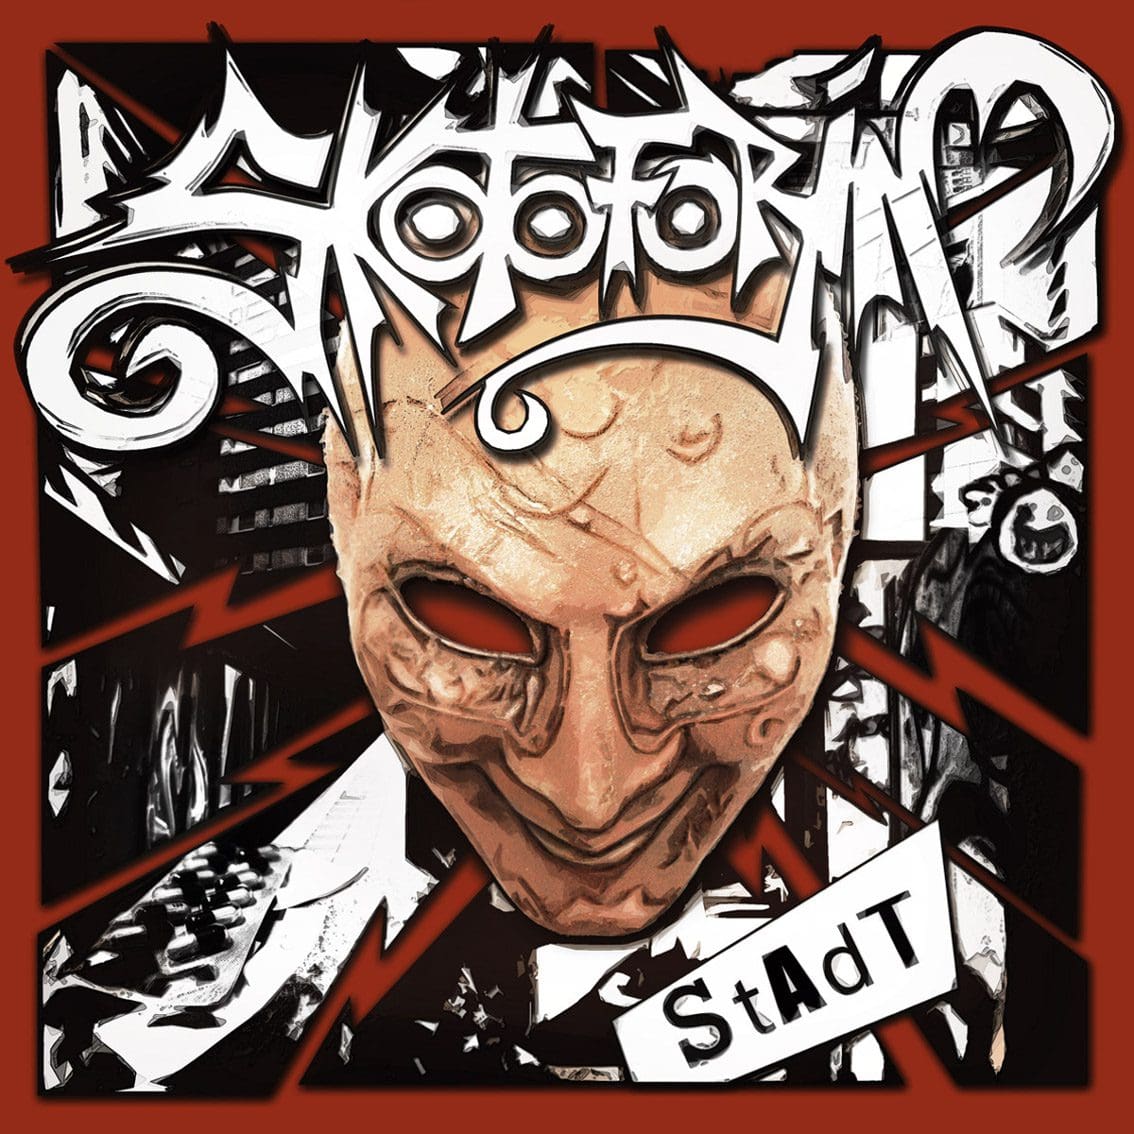 Skotofobin release industrial / metal debut EP 'Stadt'